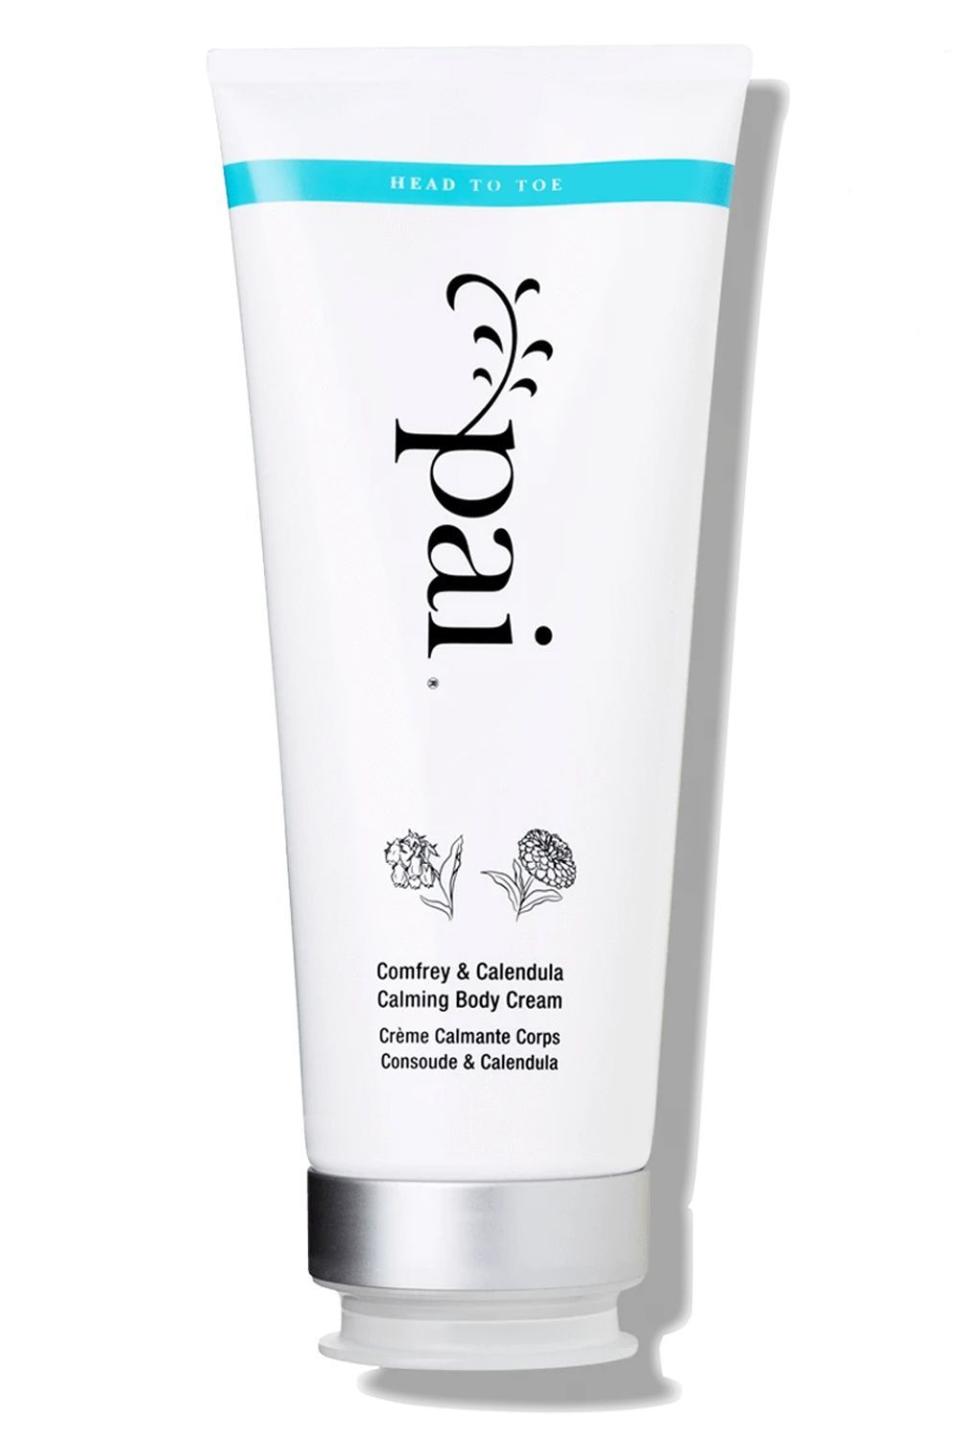 11) Pai Skincare Comfrey & Calendula Calming Body Cream